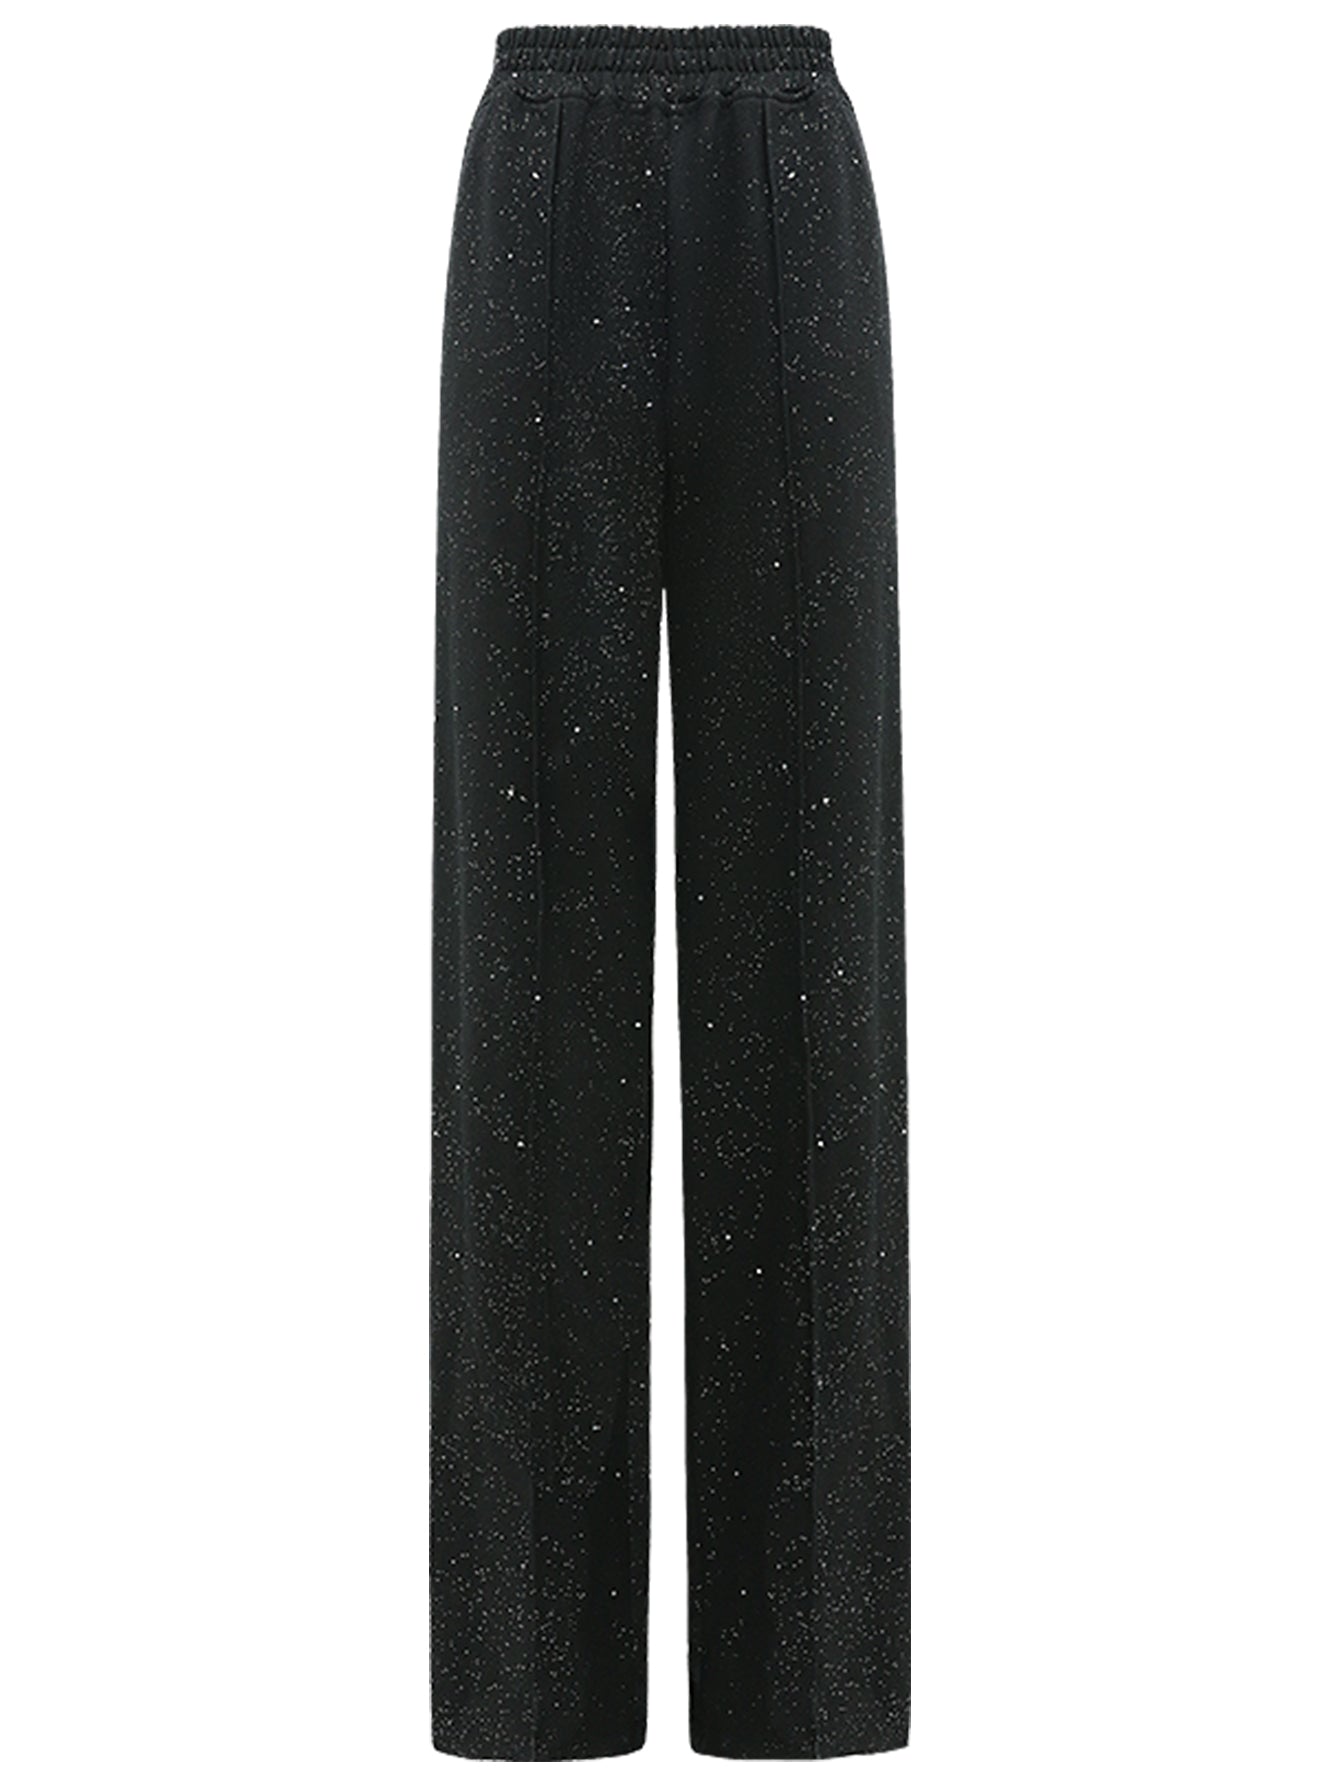 straight-cut-sequined-black-pants_all_black_4.jpg